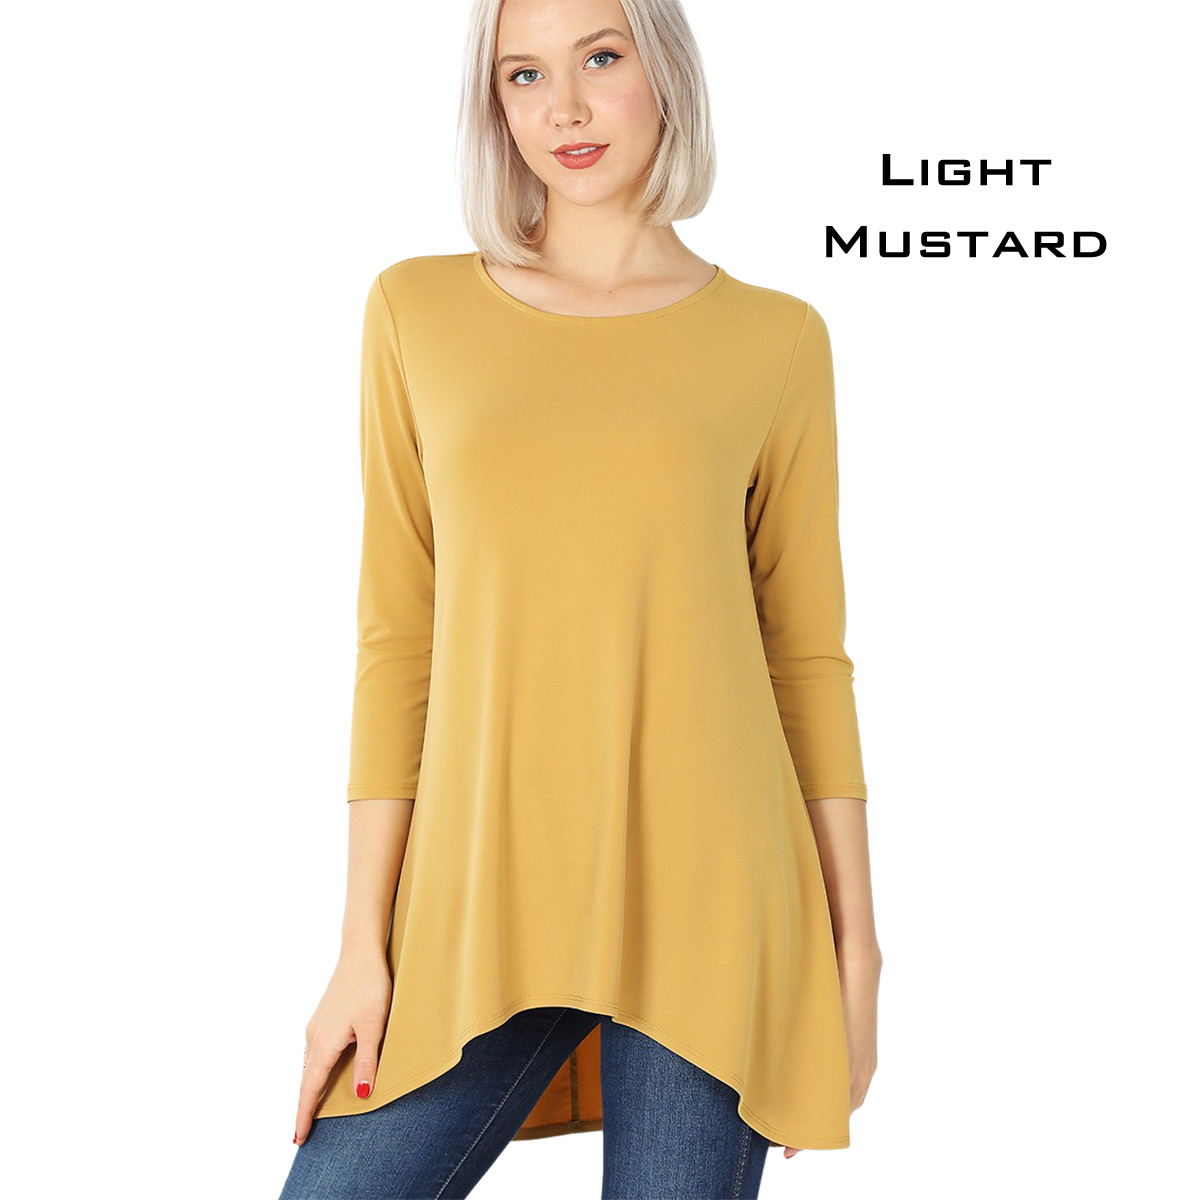 Light Mustard Ity High-Low 3/4 Sleeve Top 2367